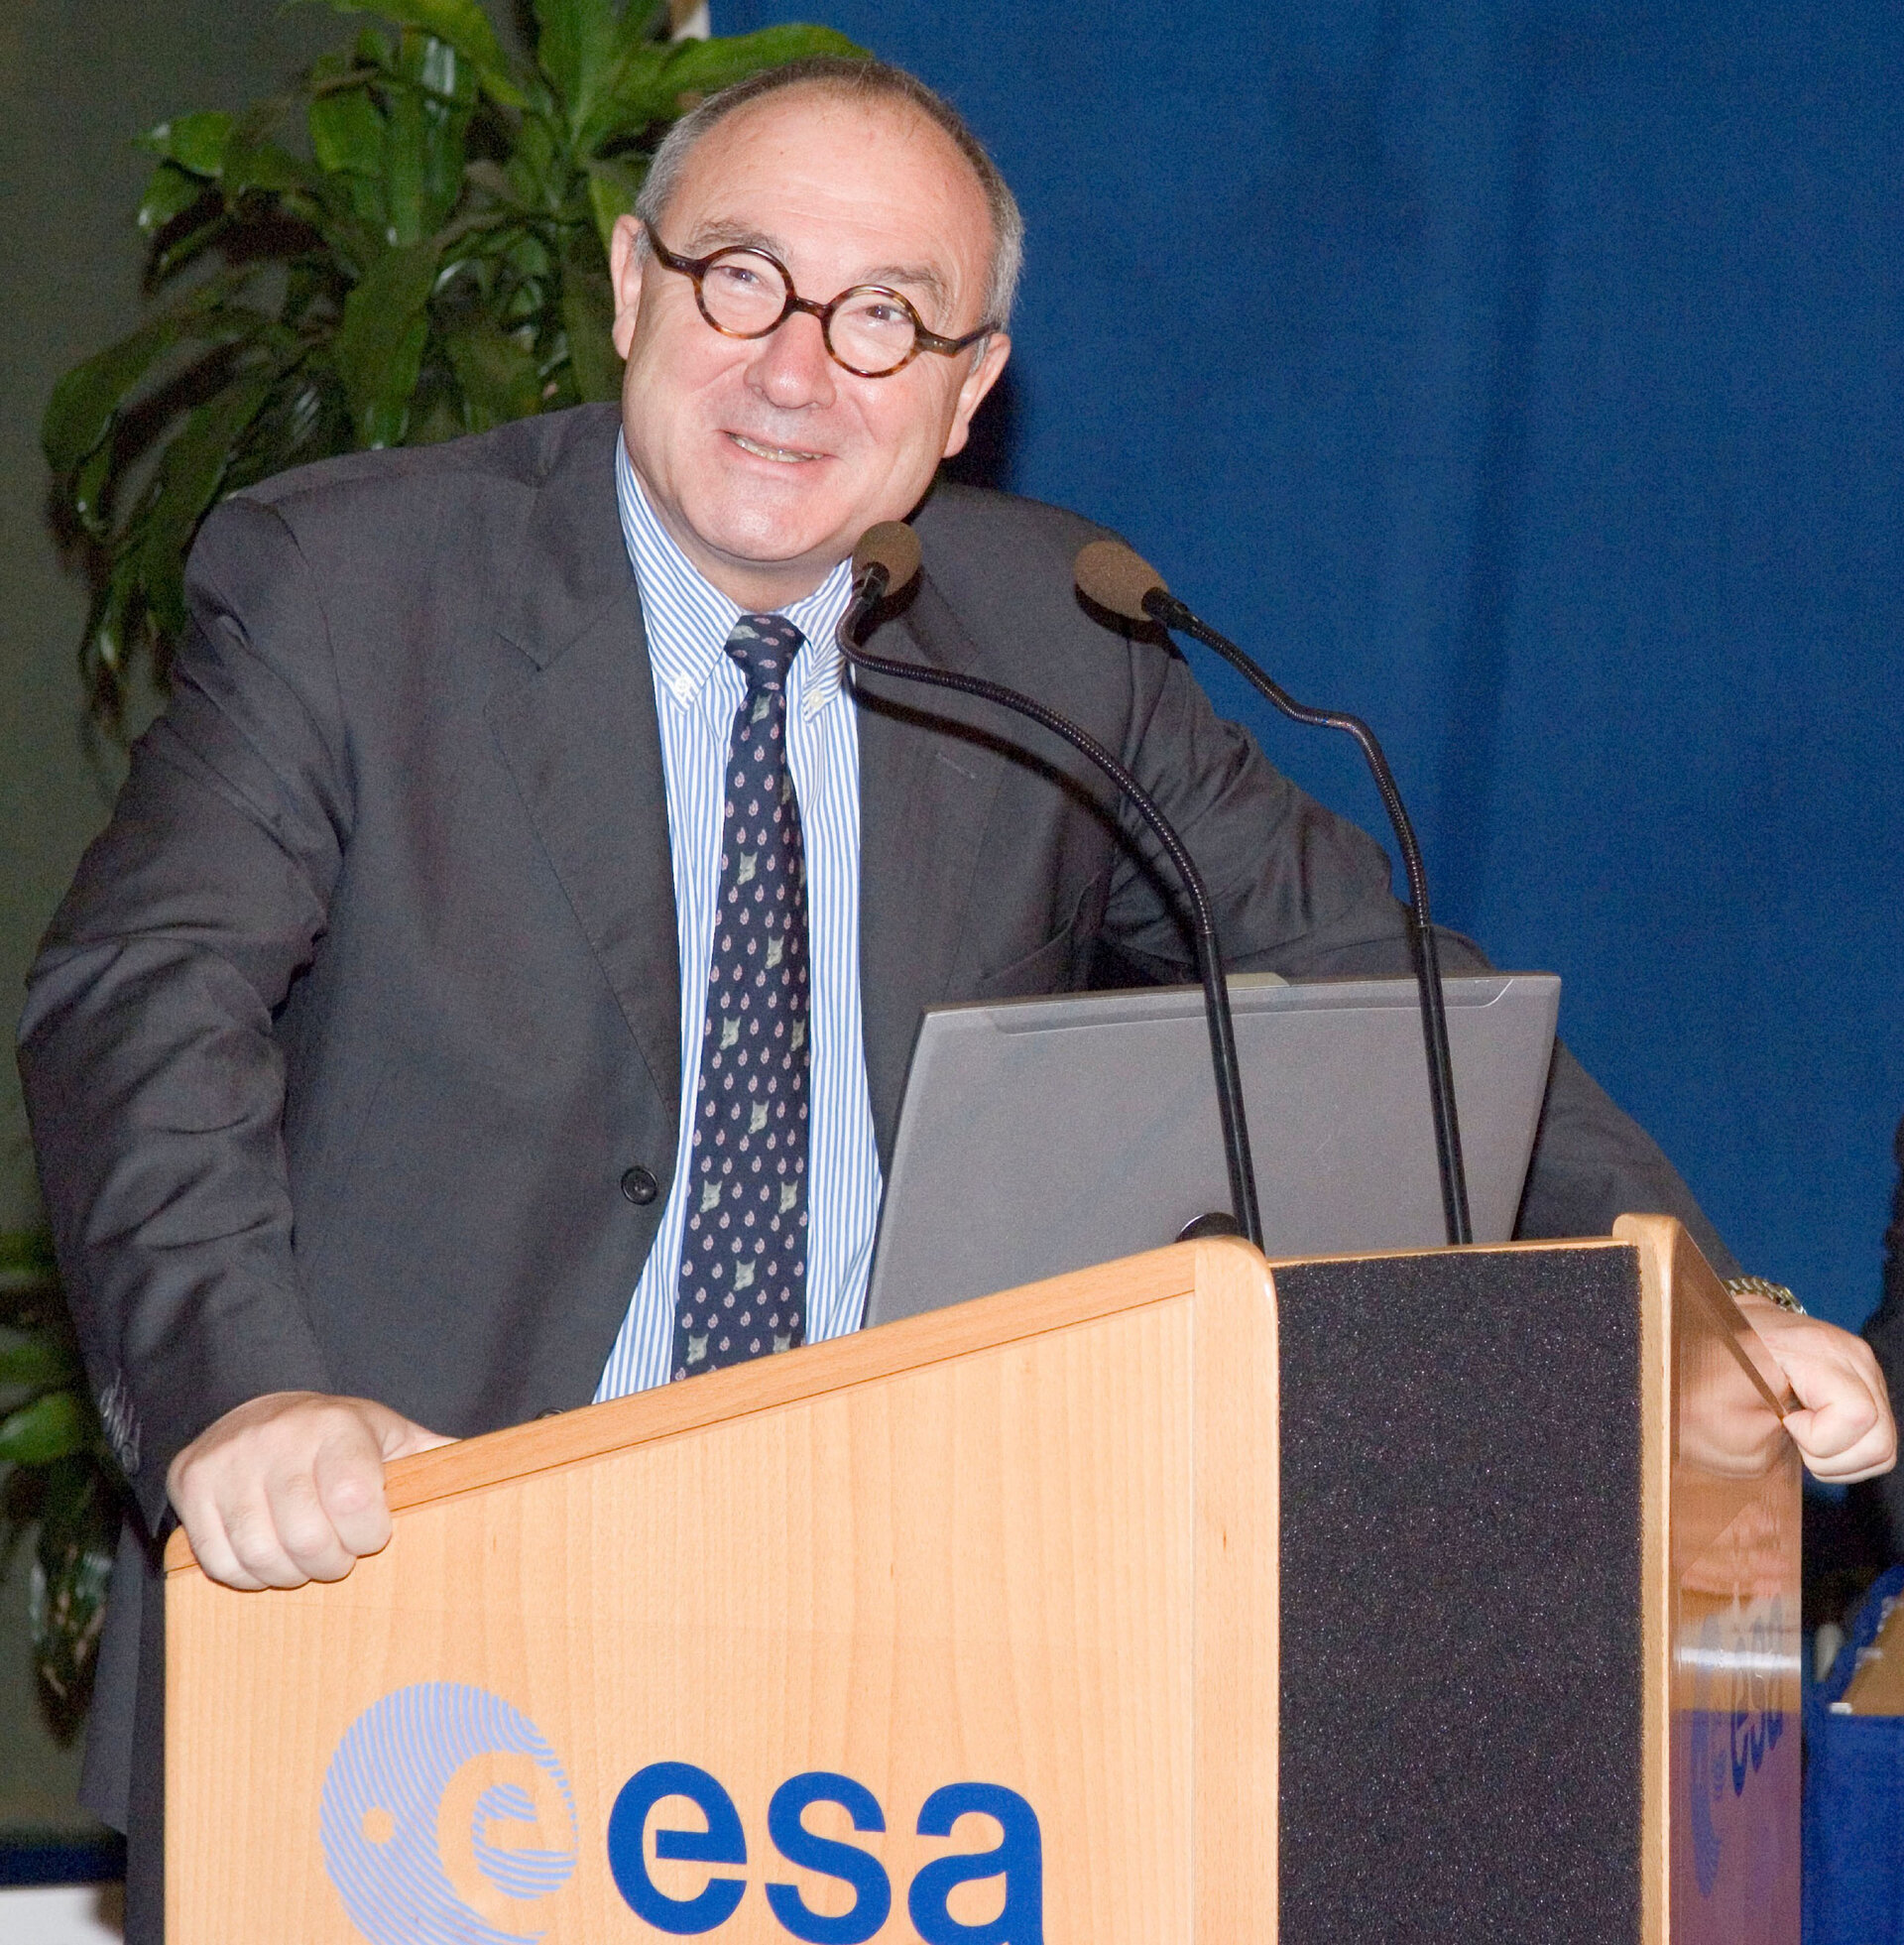 O Director-Geral da ESA, Jean-Jacques Dordain